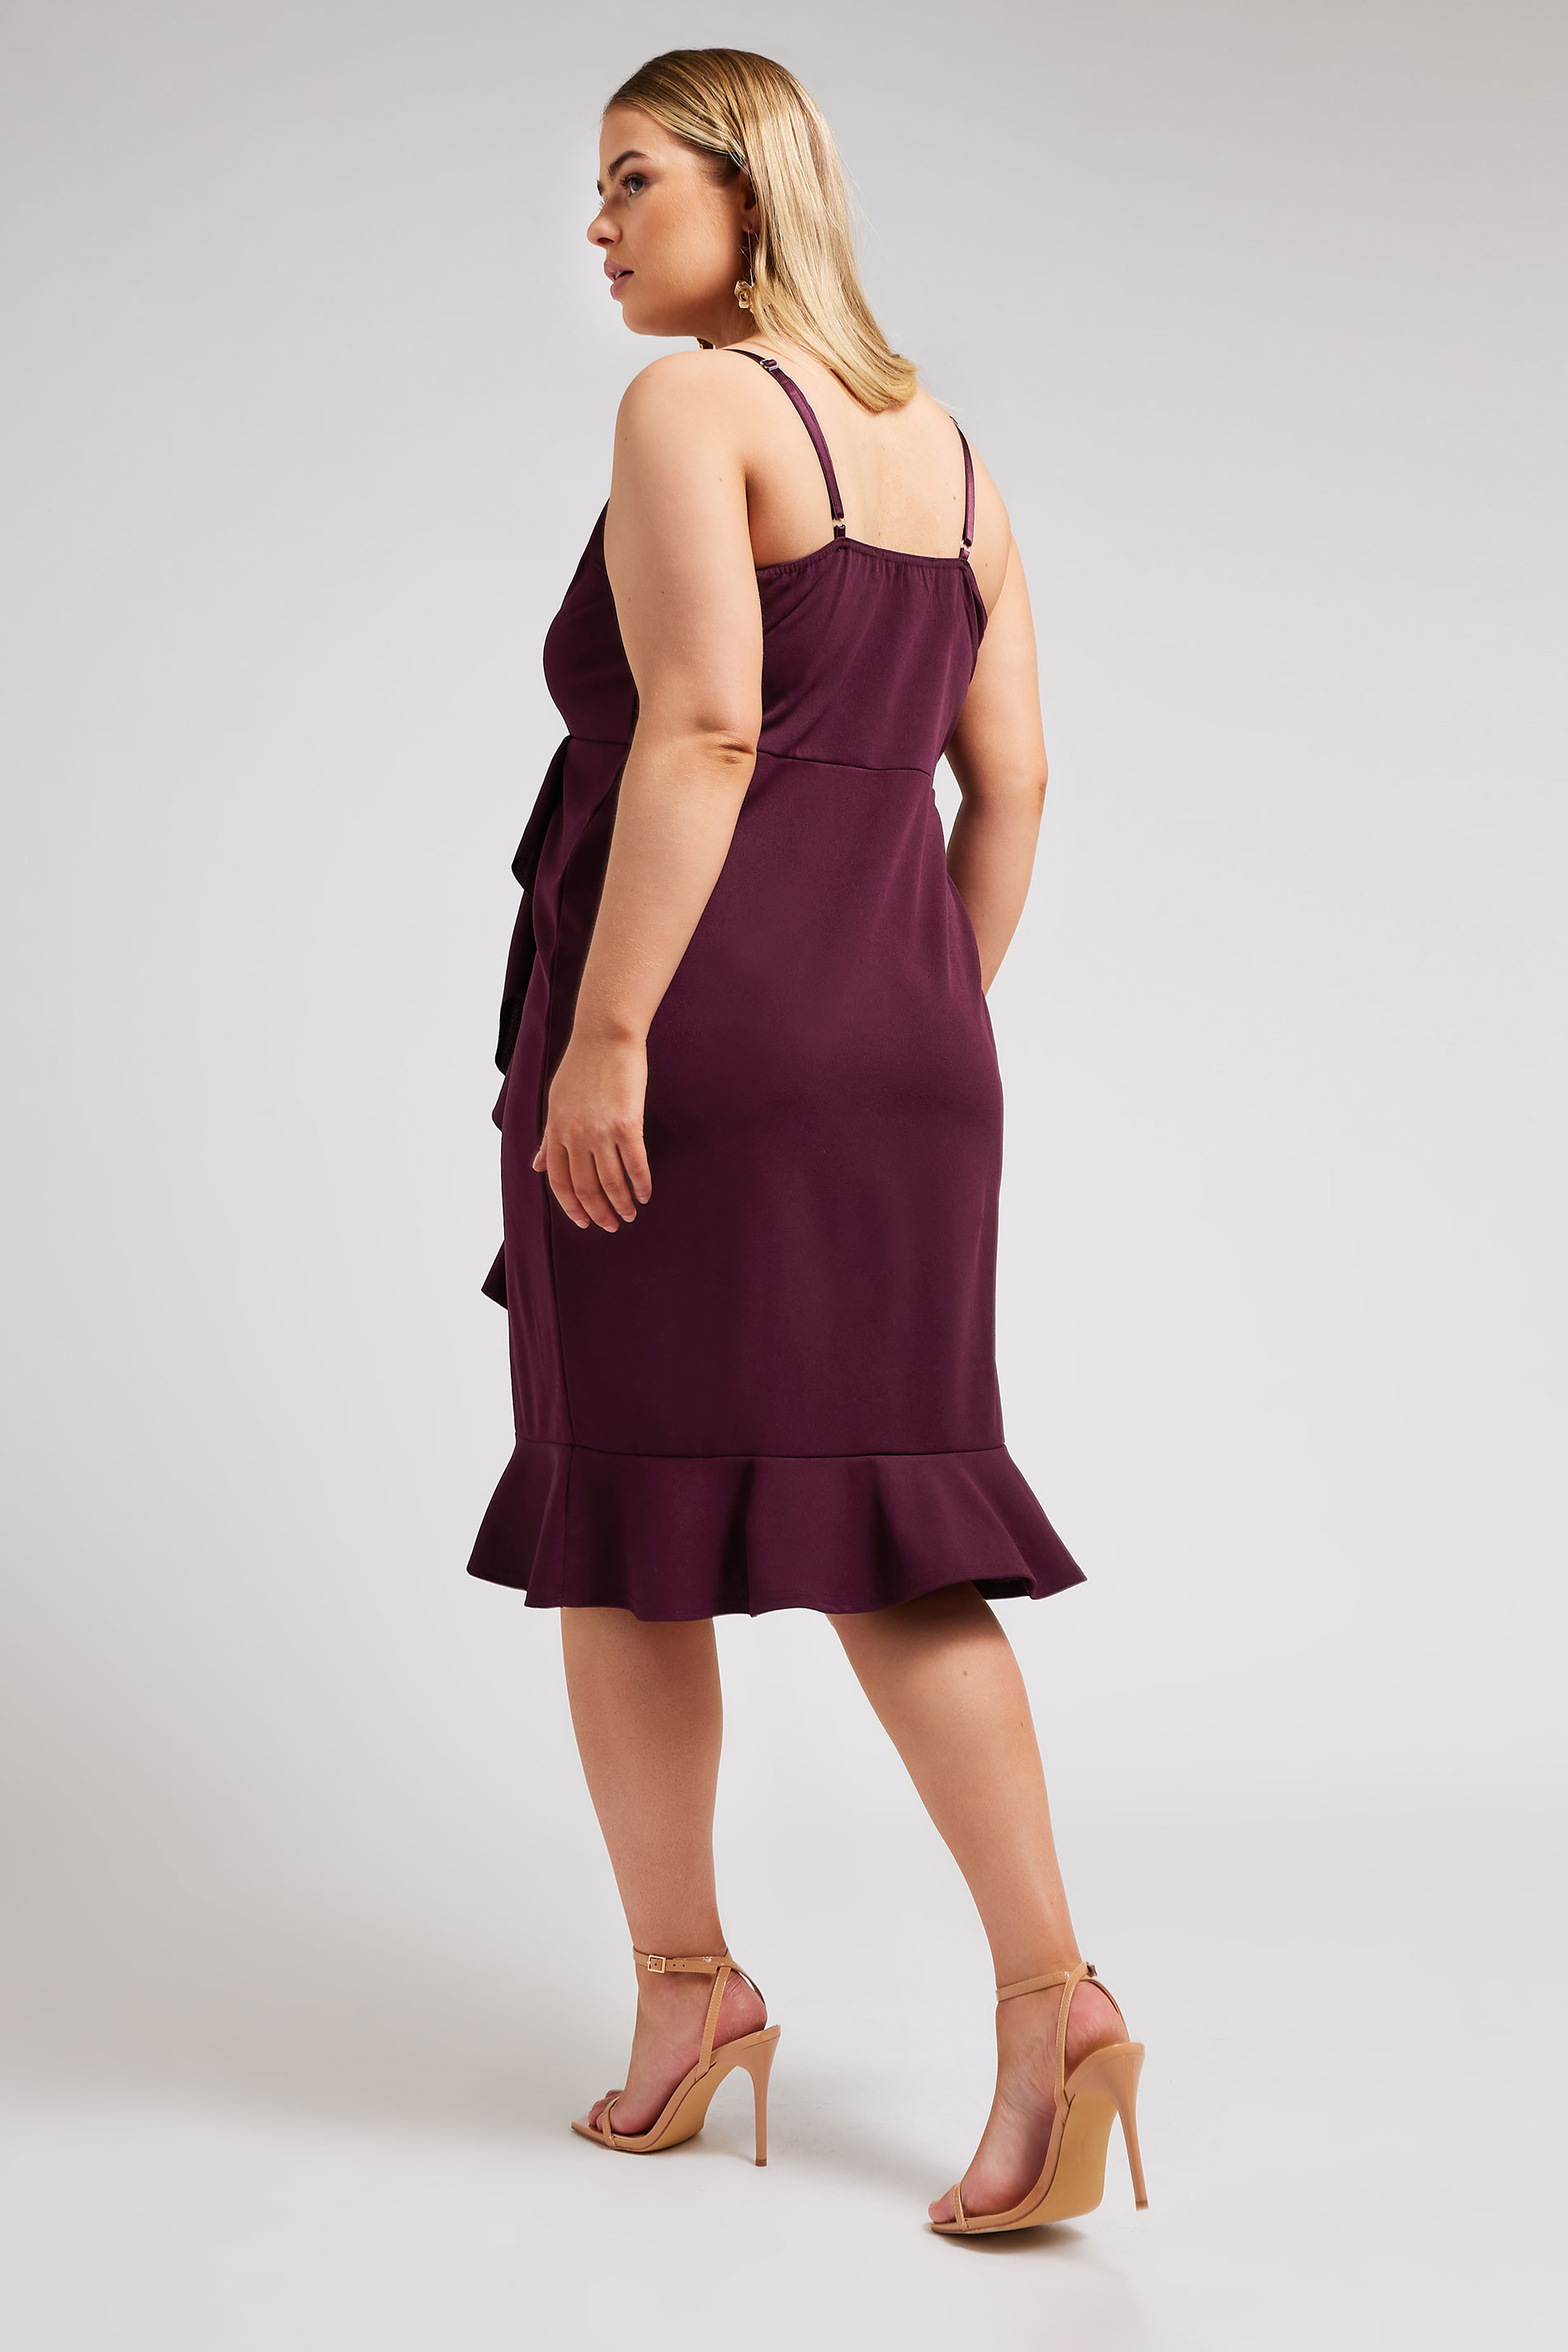 YOURS LONDON Plus Size Purple Ruffle Wrap Dress | Yours Clothing 3